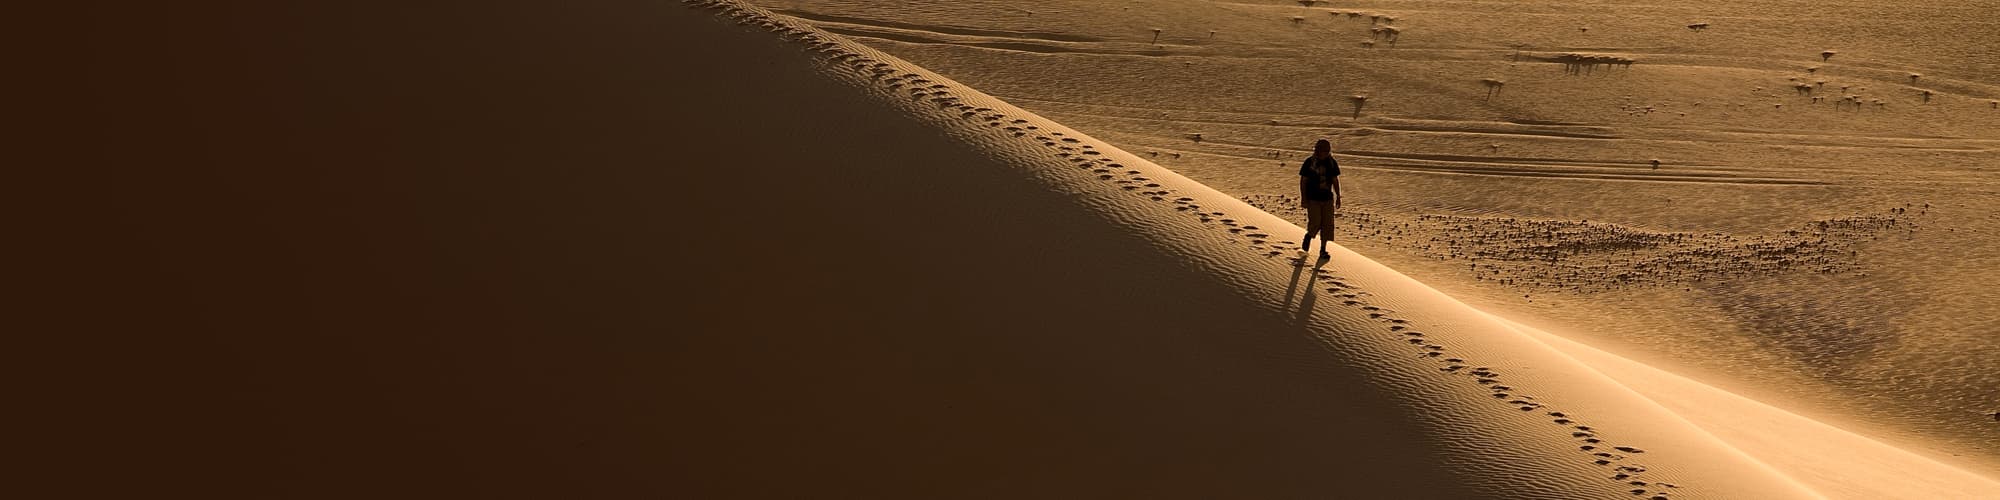 Voyage en groupe Mauritanie © MOIRENC Camille / hemis.fr